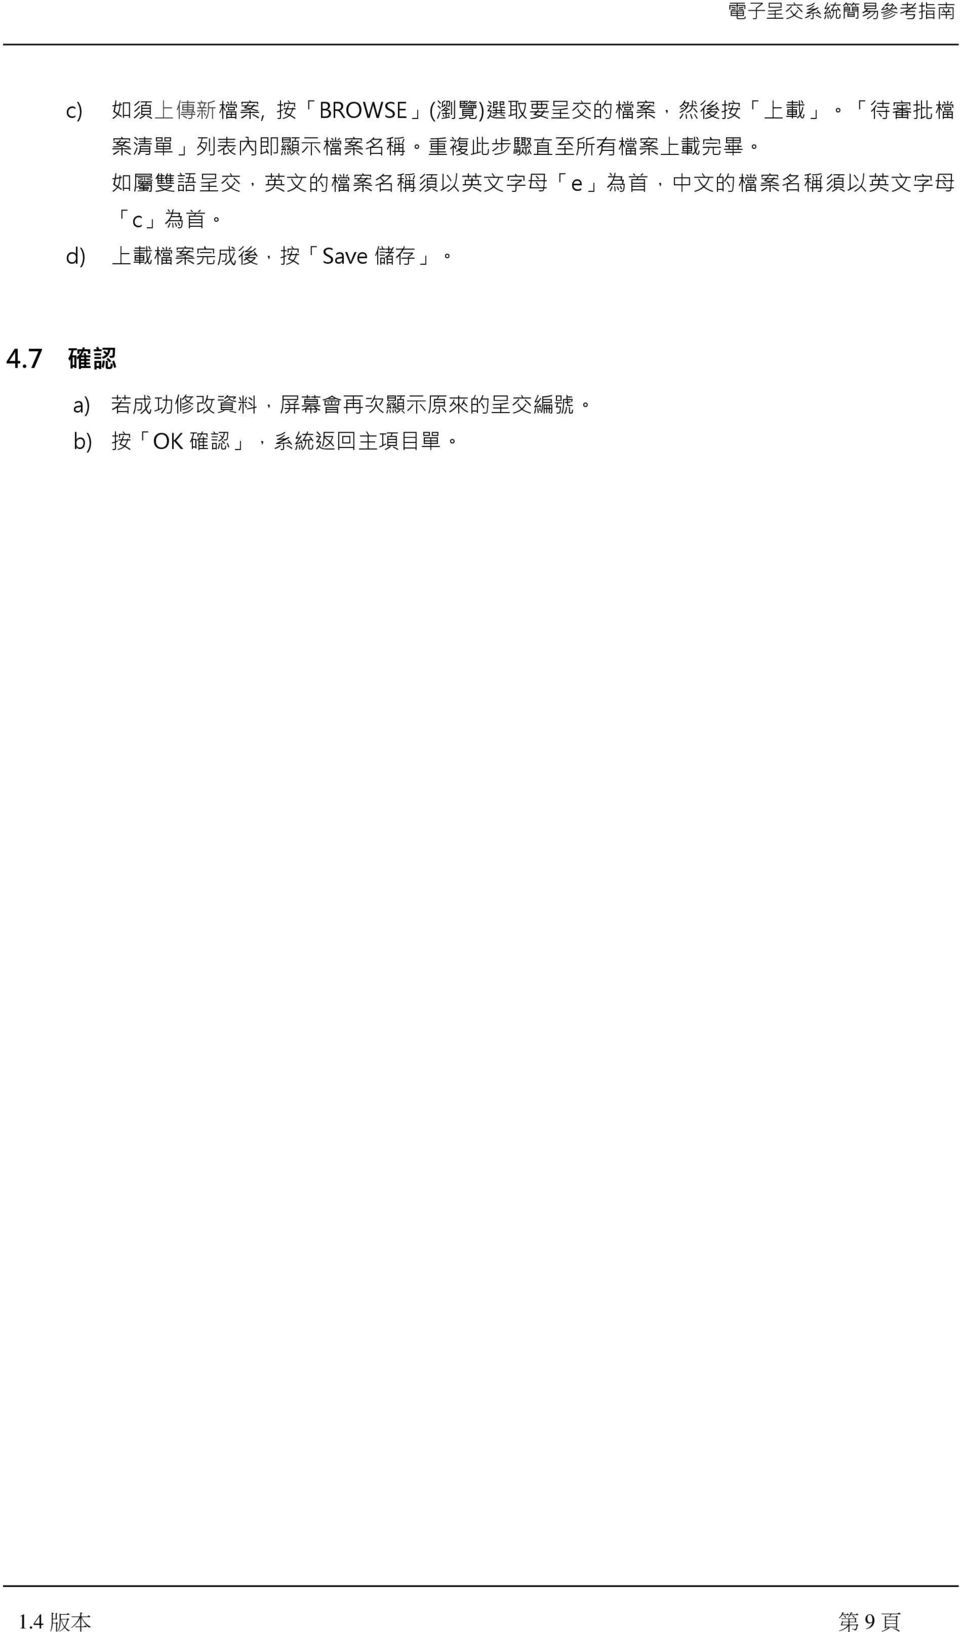 e 為 首, 中 文 的 檔 案 名 稱 須 以 英 文 字 母 c 為 首 d) 上 載 檔 案 完 成 後, 按 Save 儲 存 4.